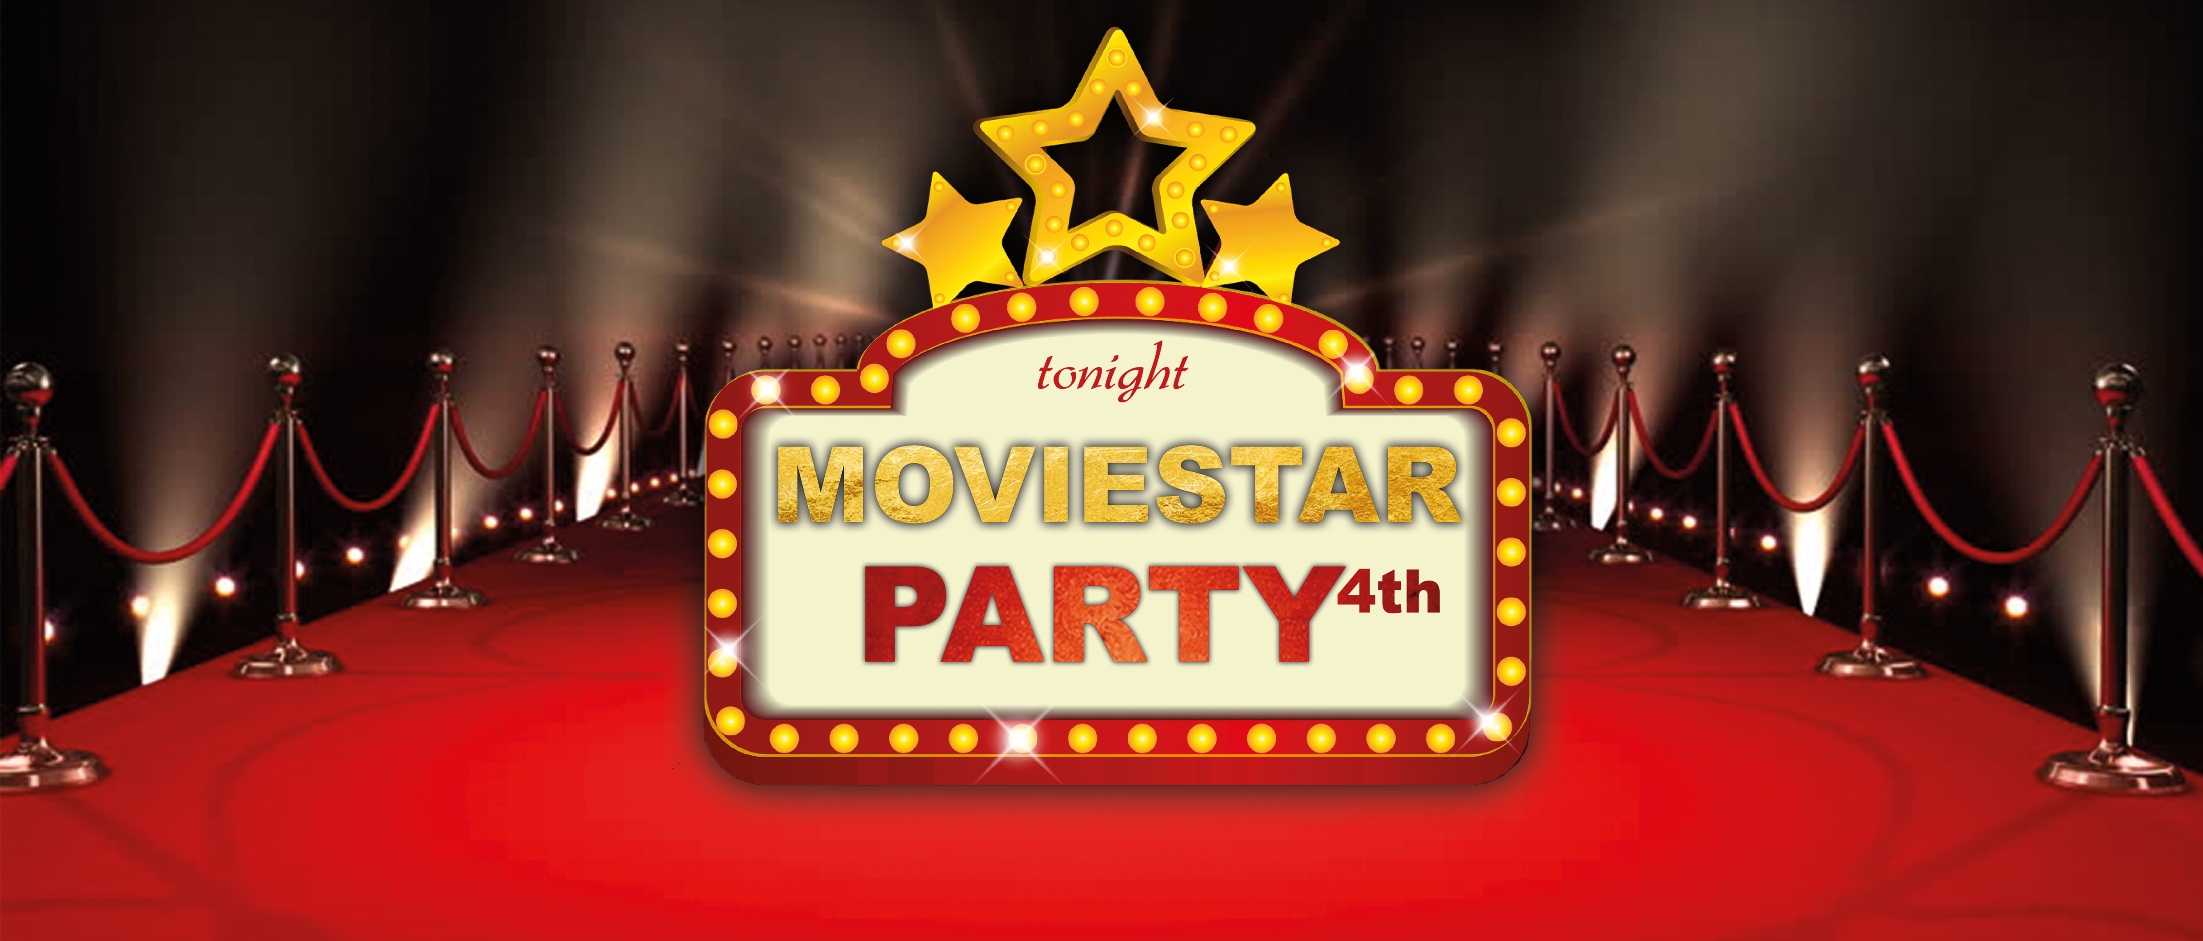 MovieStar Party